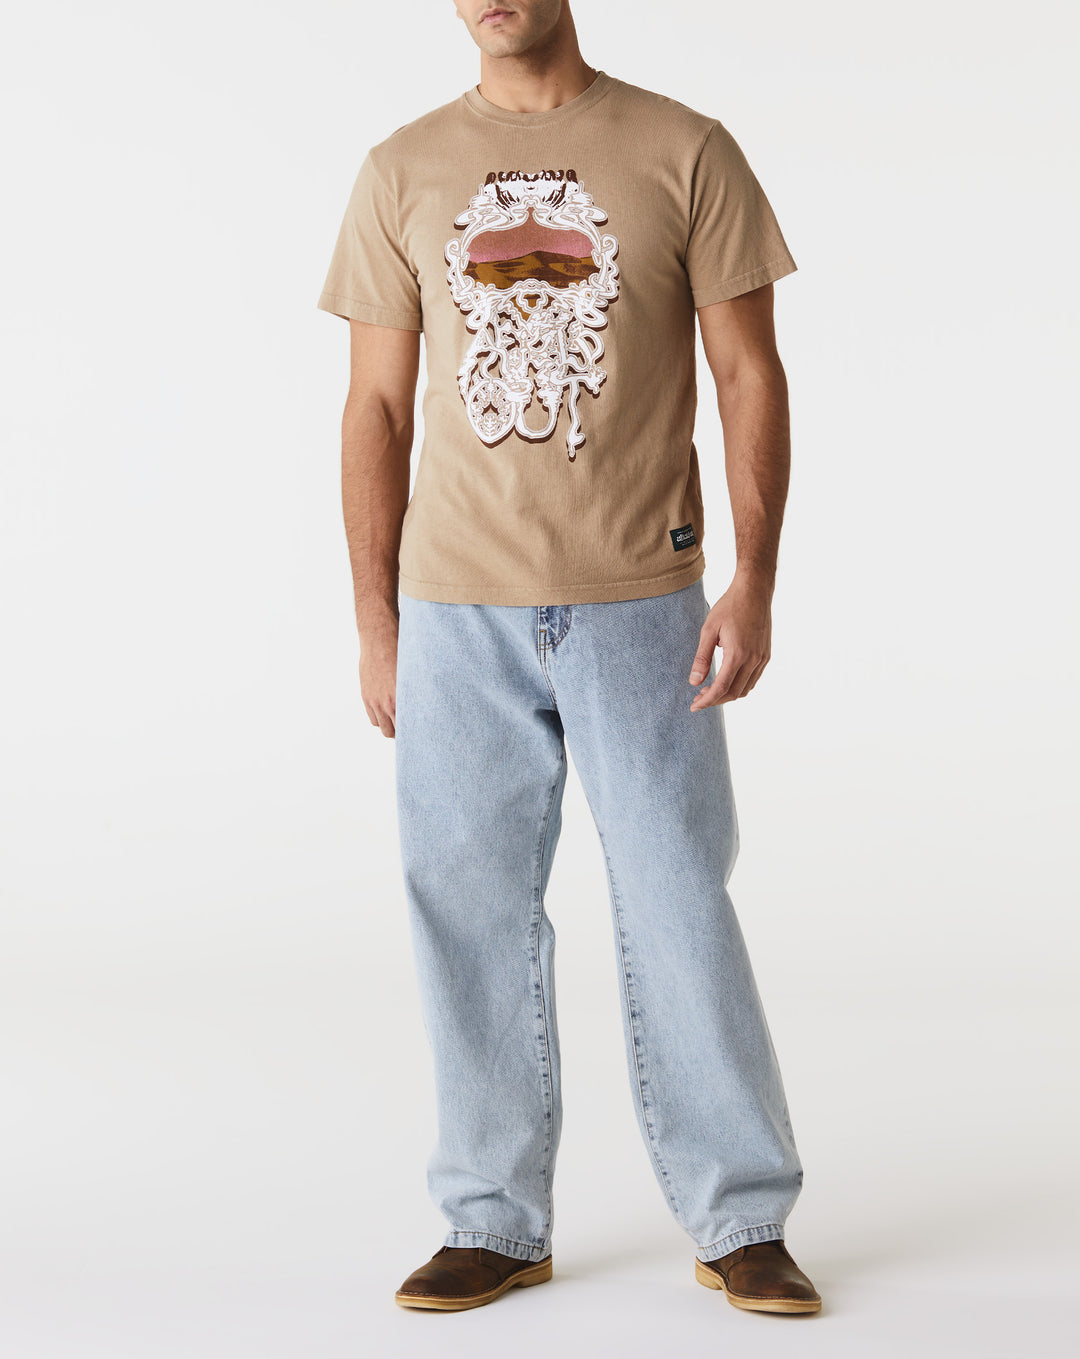 Afield Out Range T-Shirt  - XHIBITION